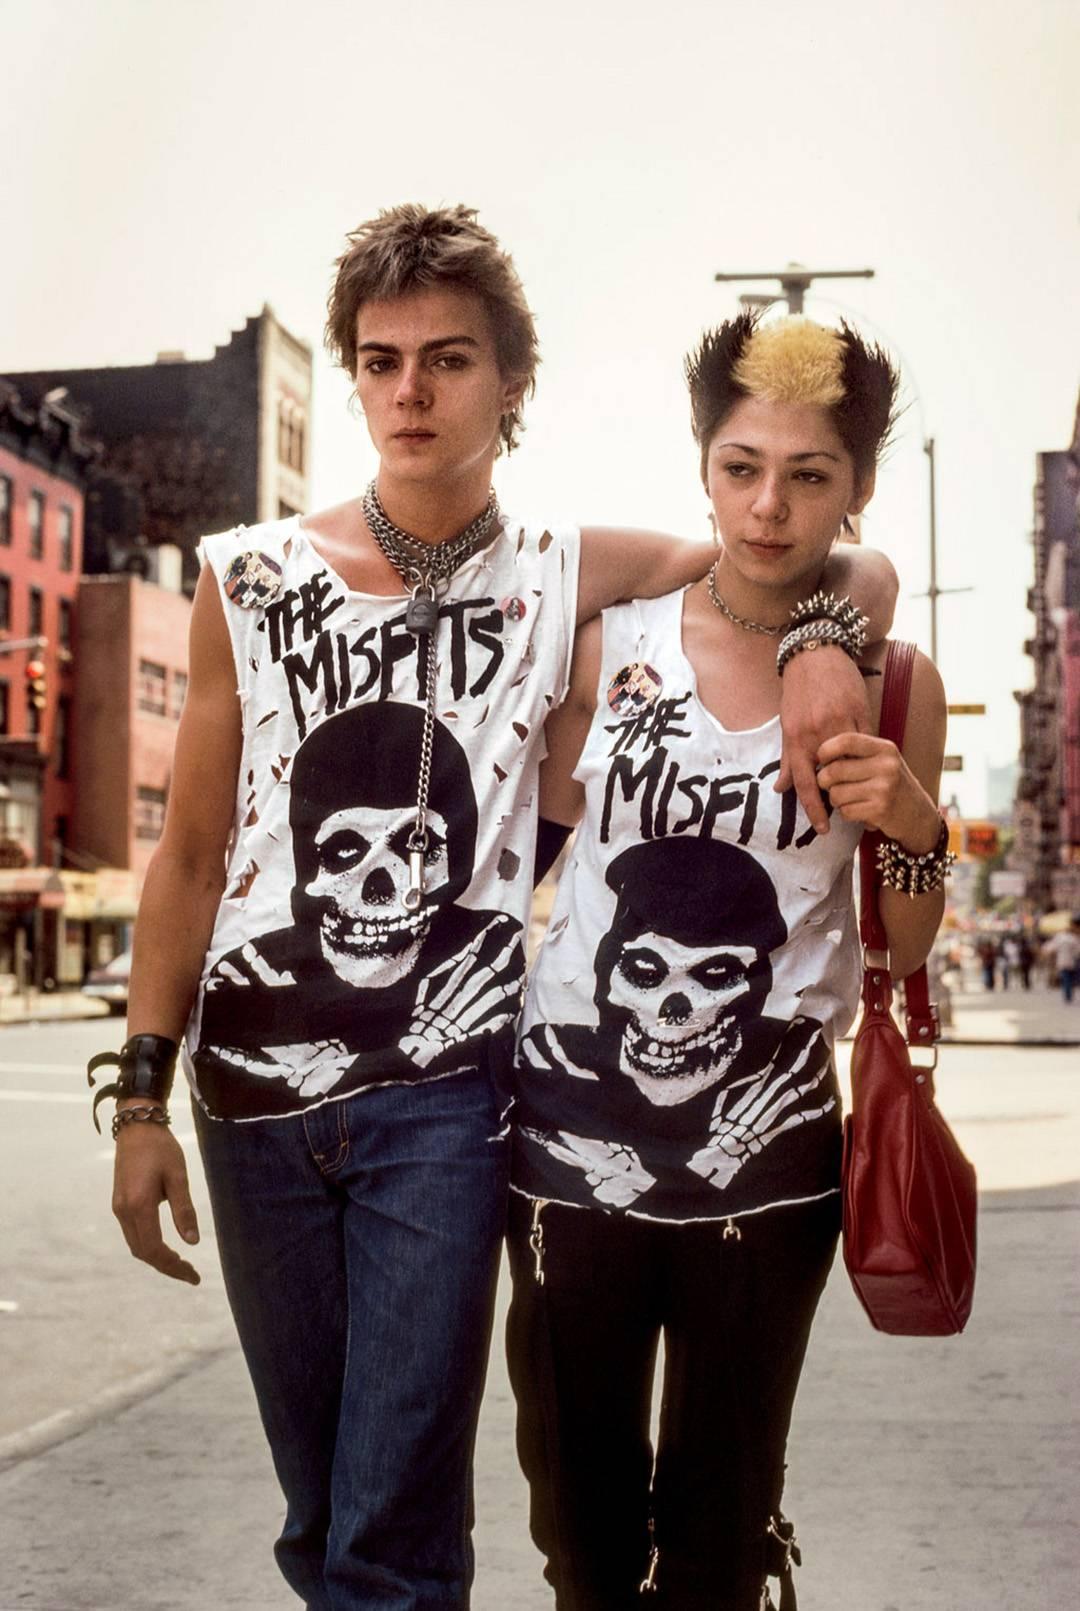 Robert Herman Color Photograph - "The Misfits, " New York City, 1981